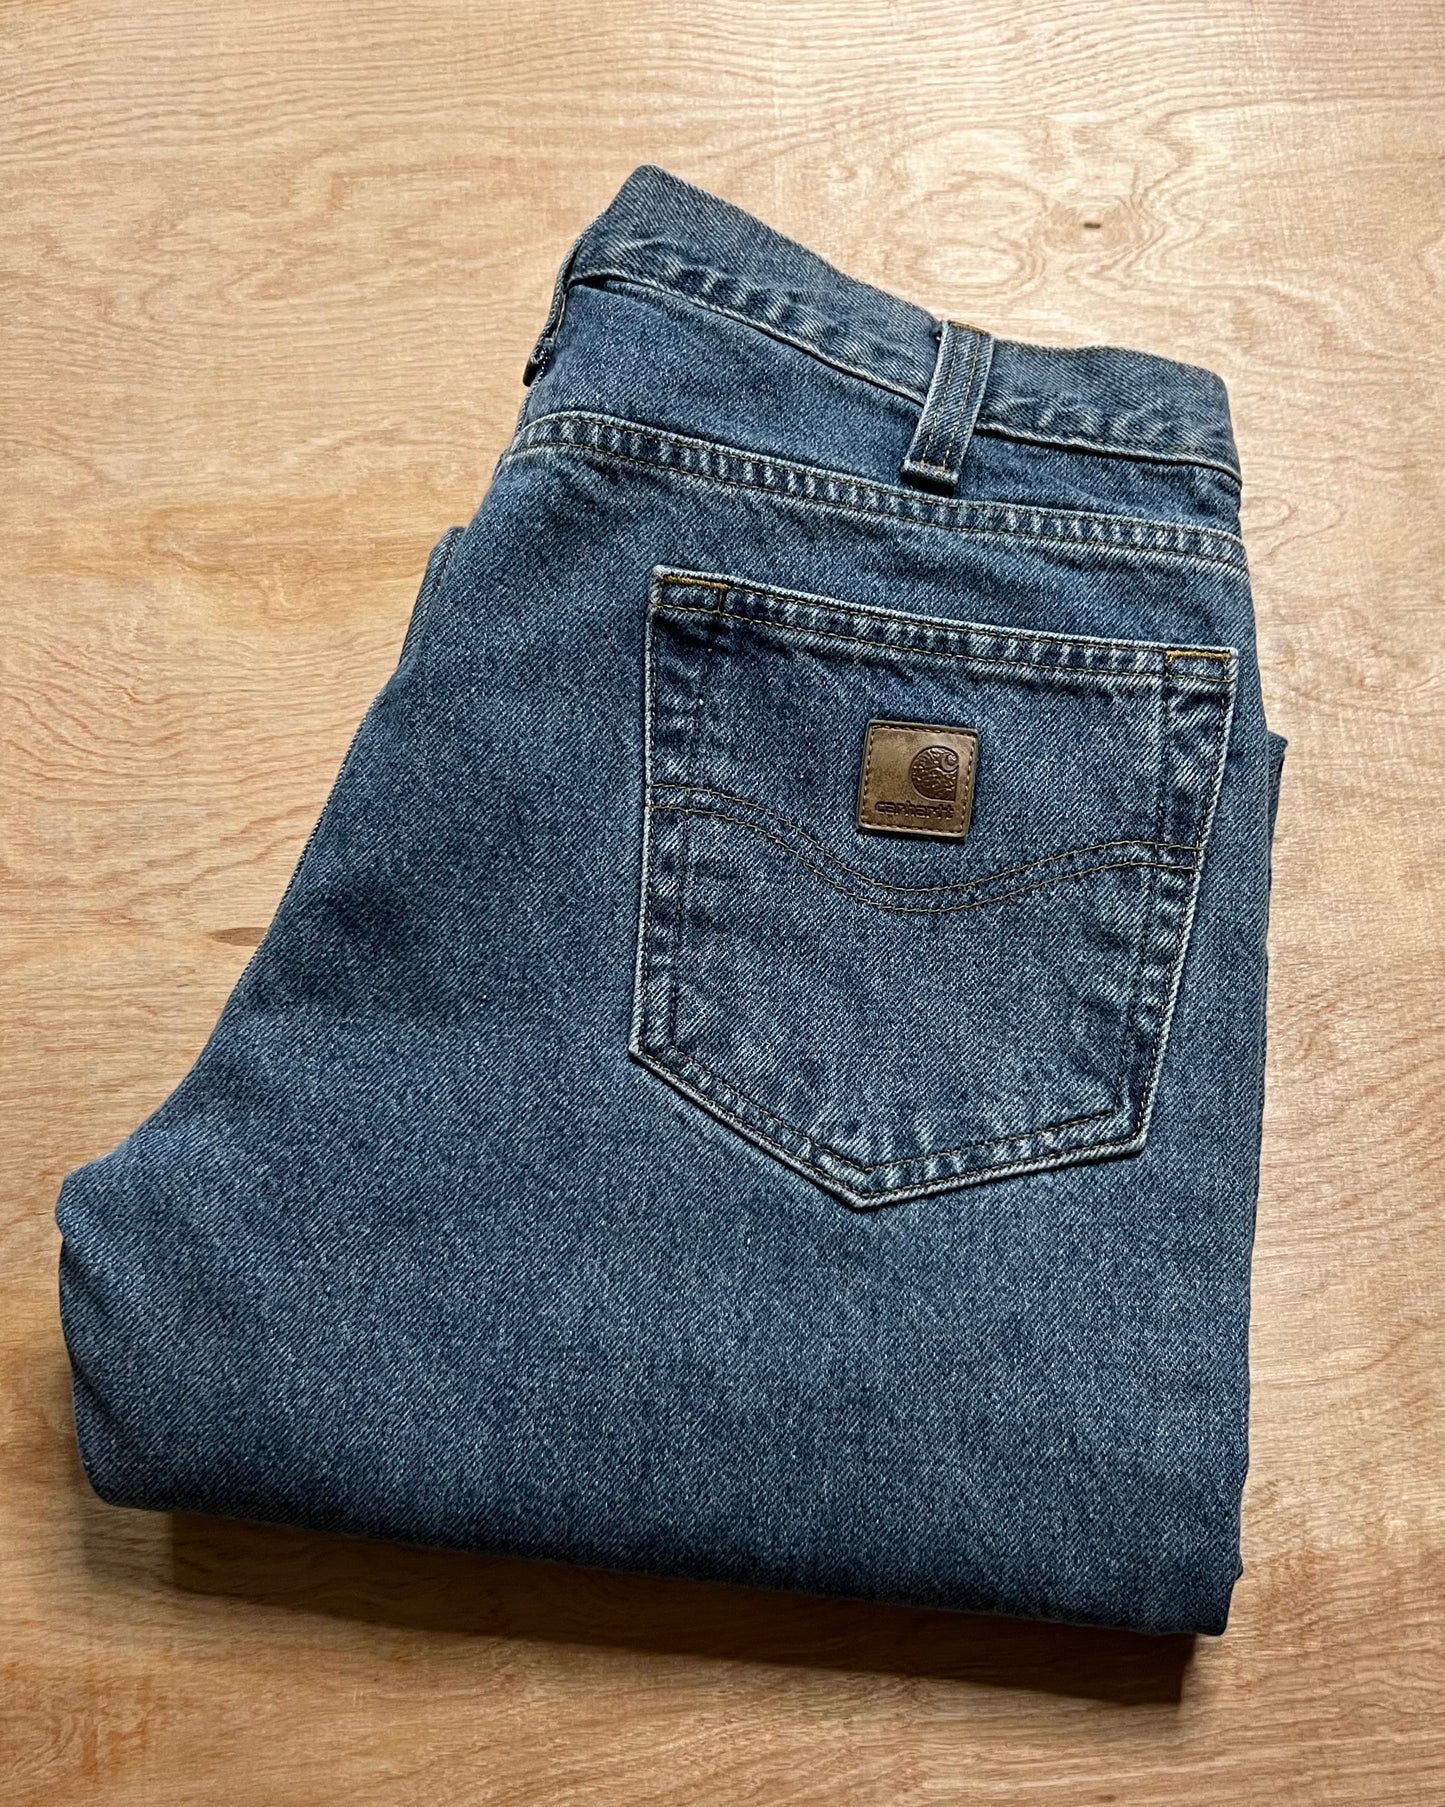 Vintage Carhartt Work Jeans